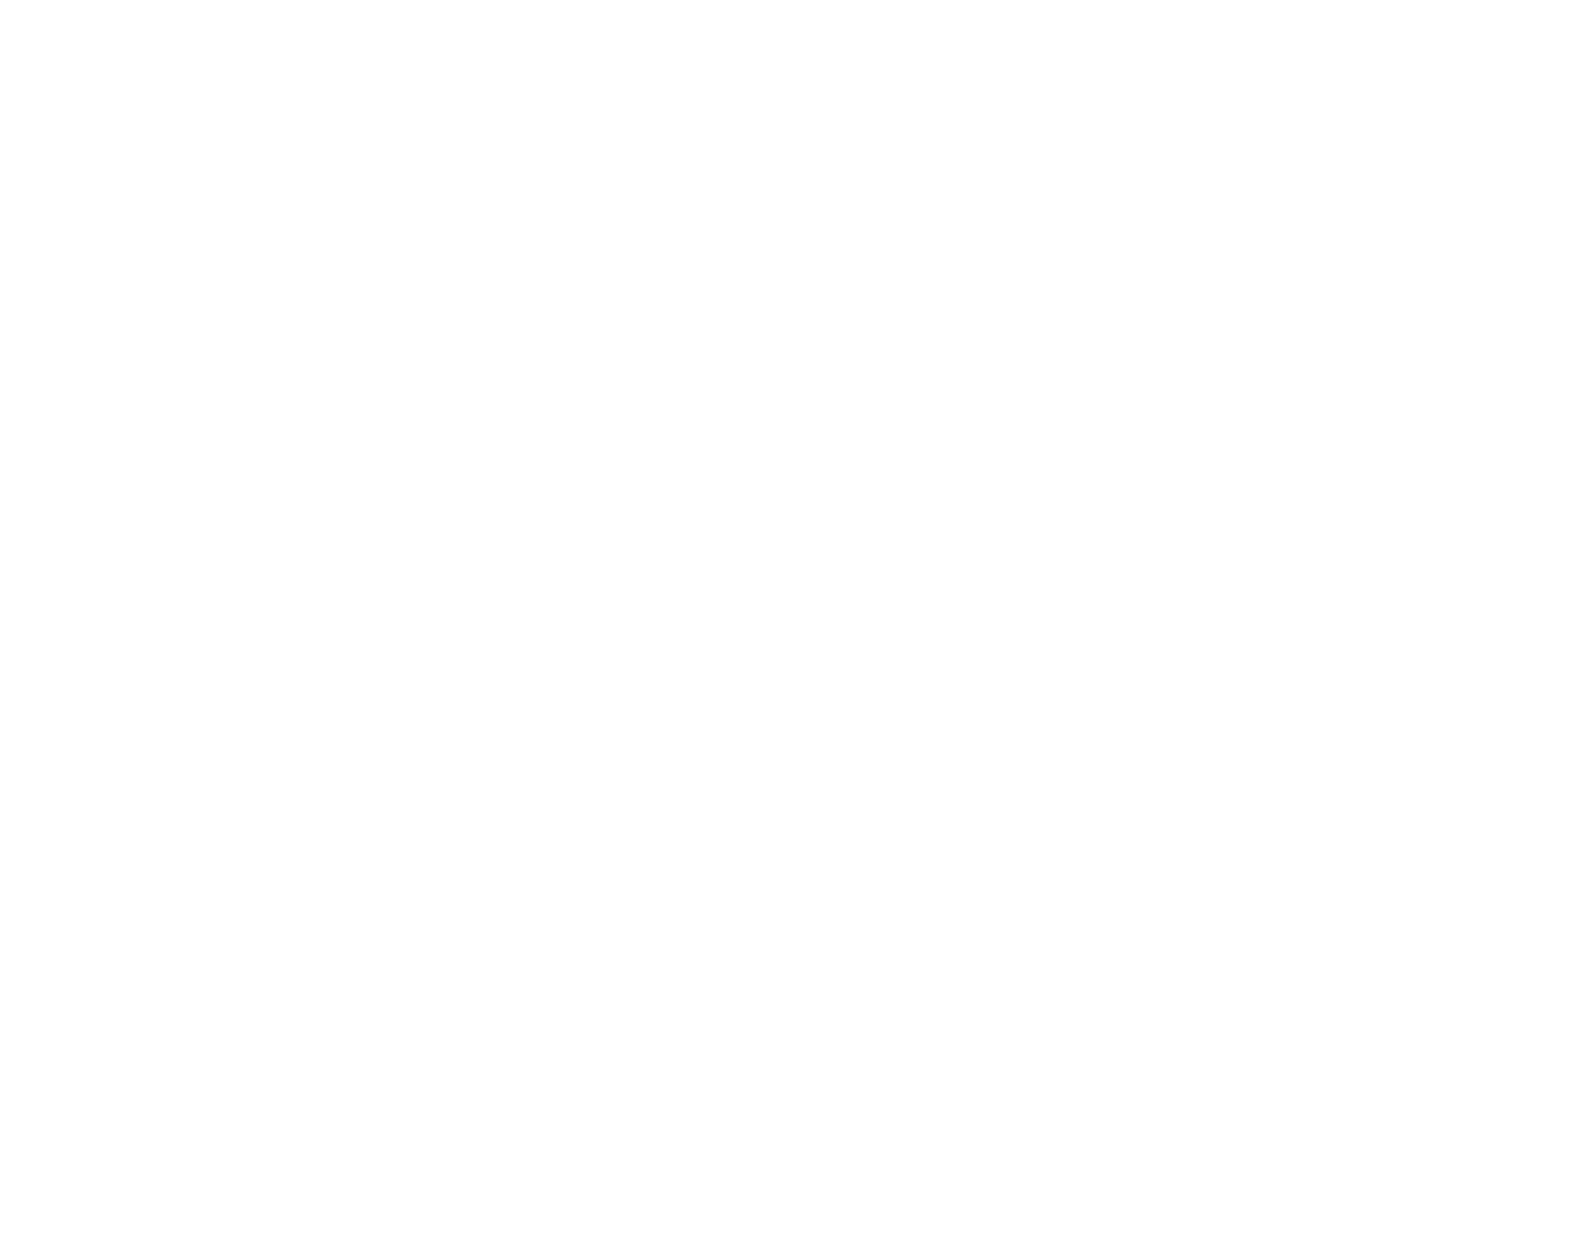 Bank of Ireland Group logo large for dark backgrounds (transparent PNG)